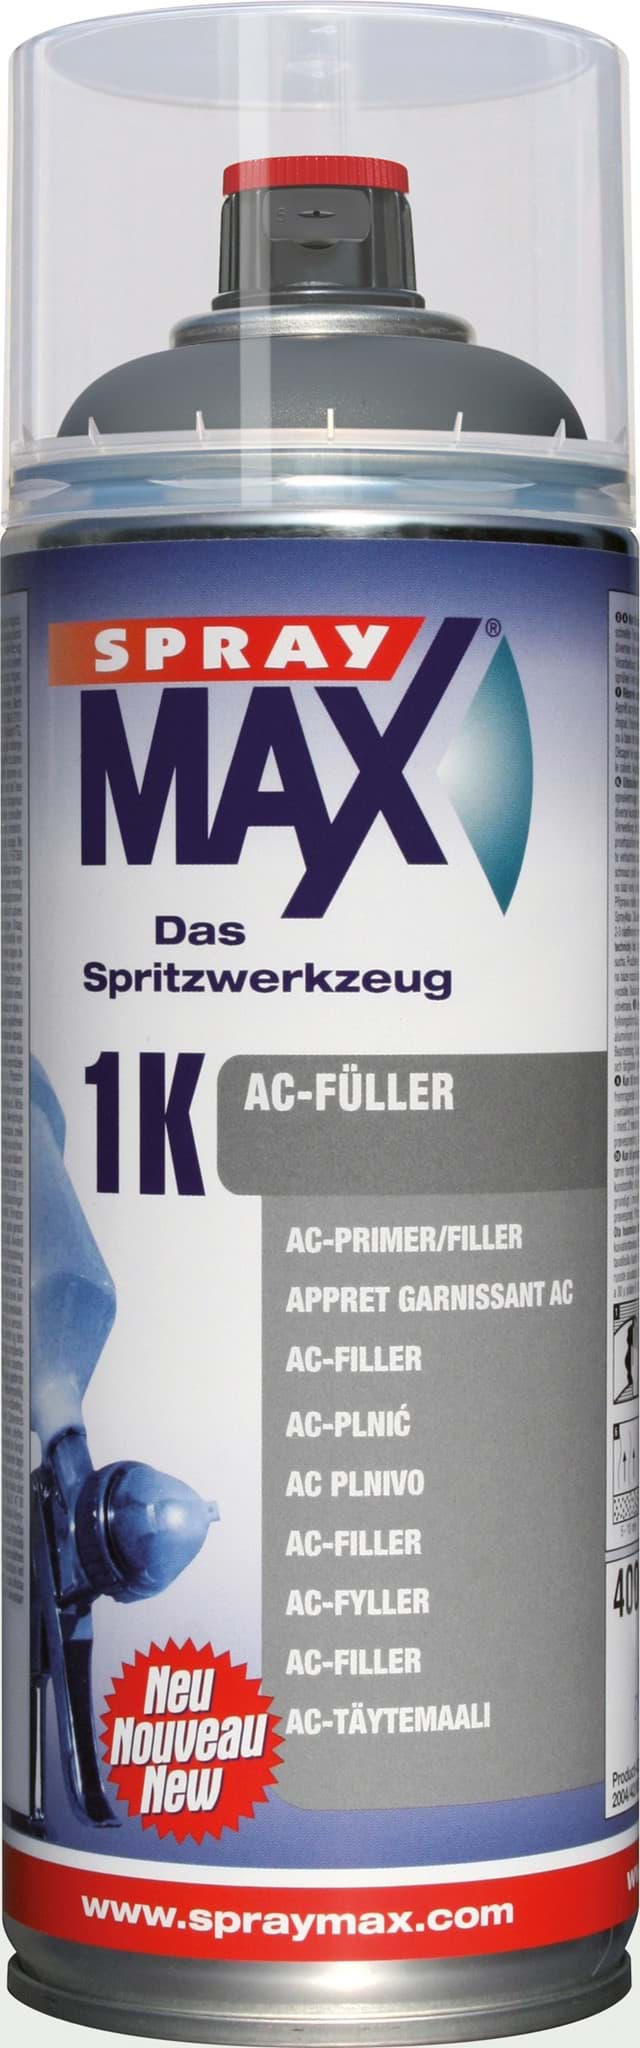 Picture of SprayMax 1K AC-Füller dunkelgrau Spray 400ml